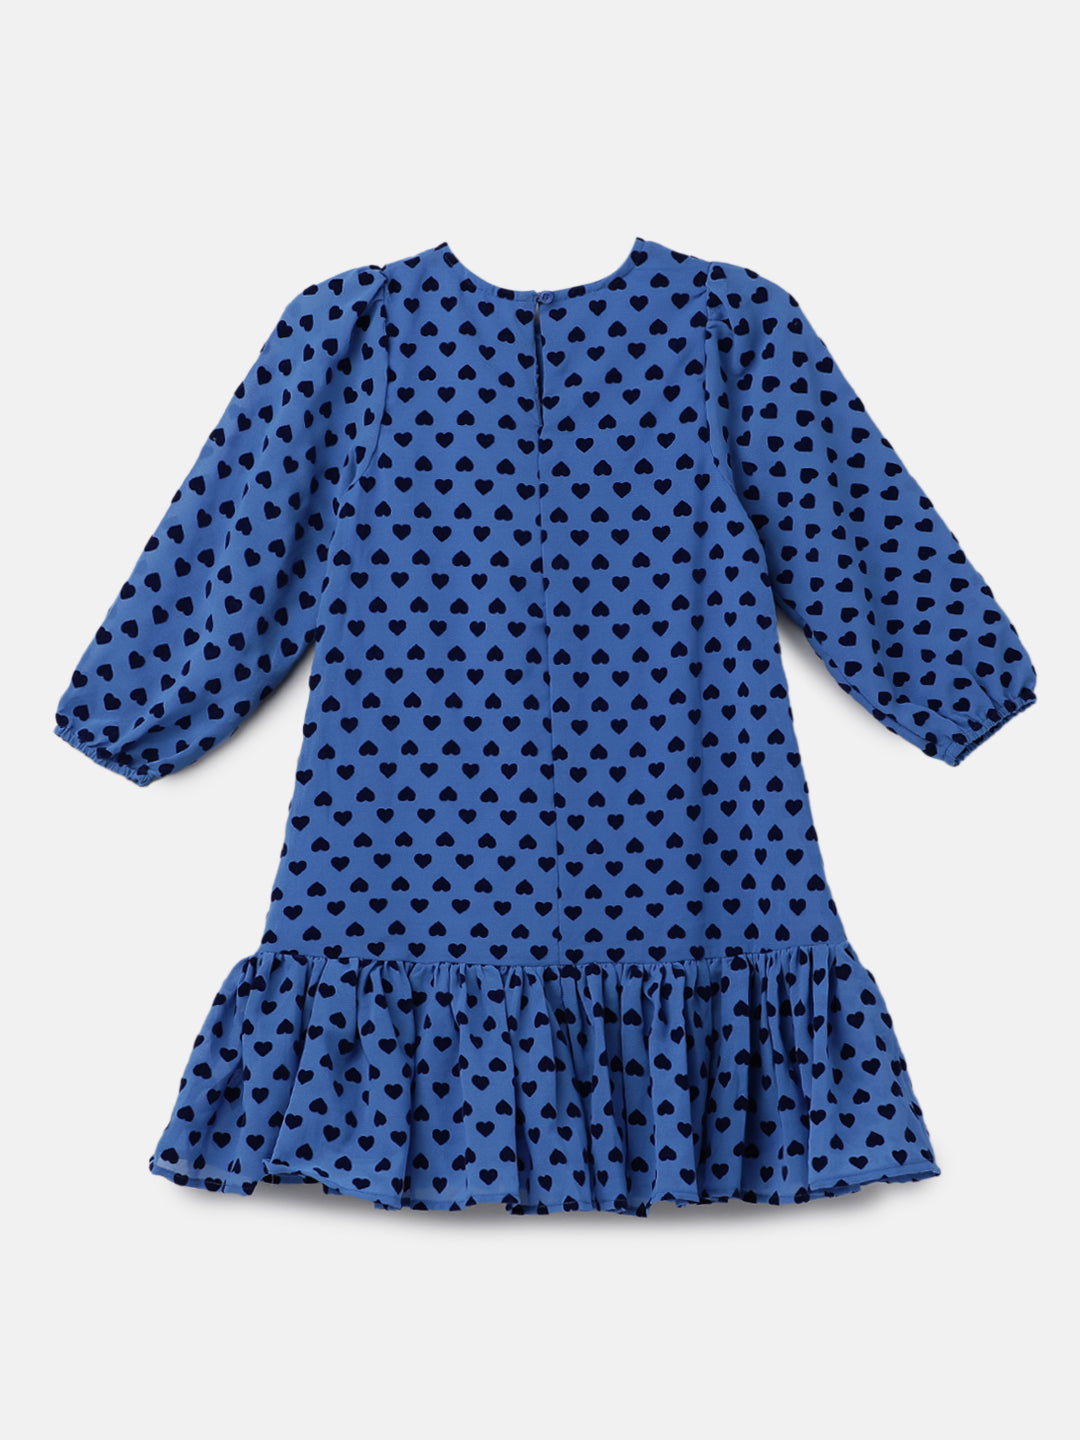 Girls Heart Printed Casual Blue Dress